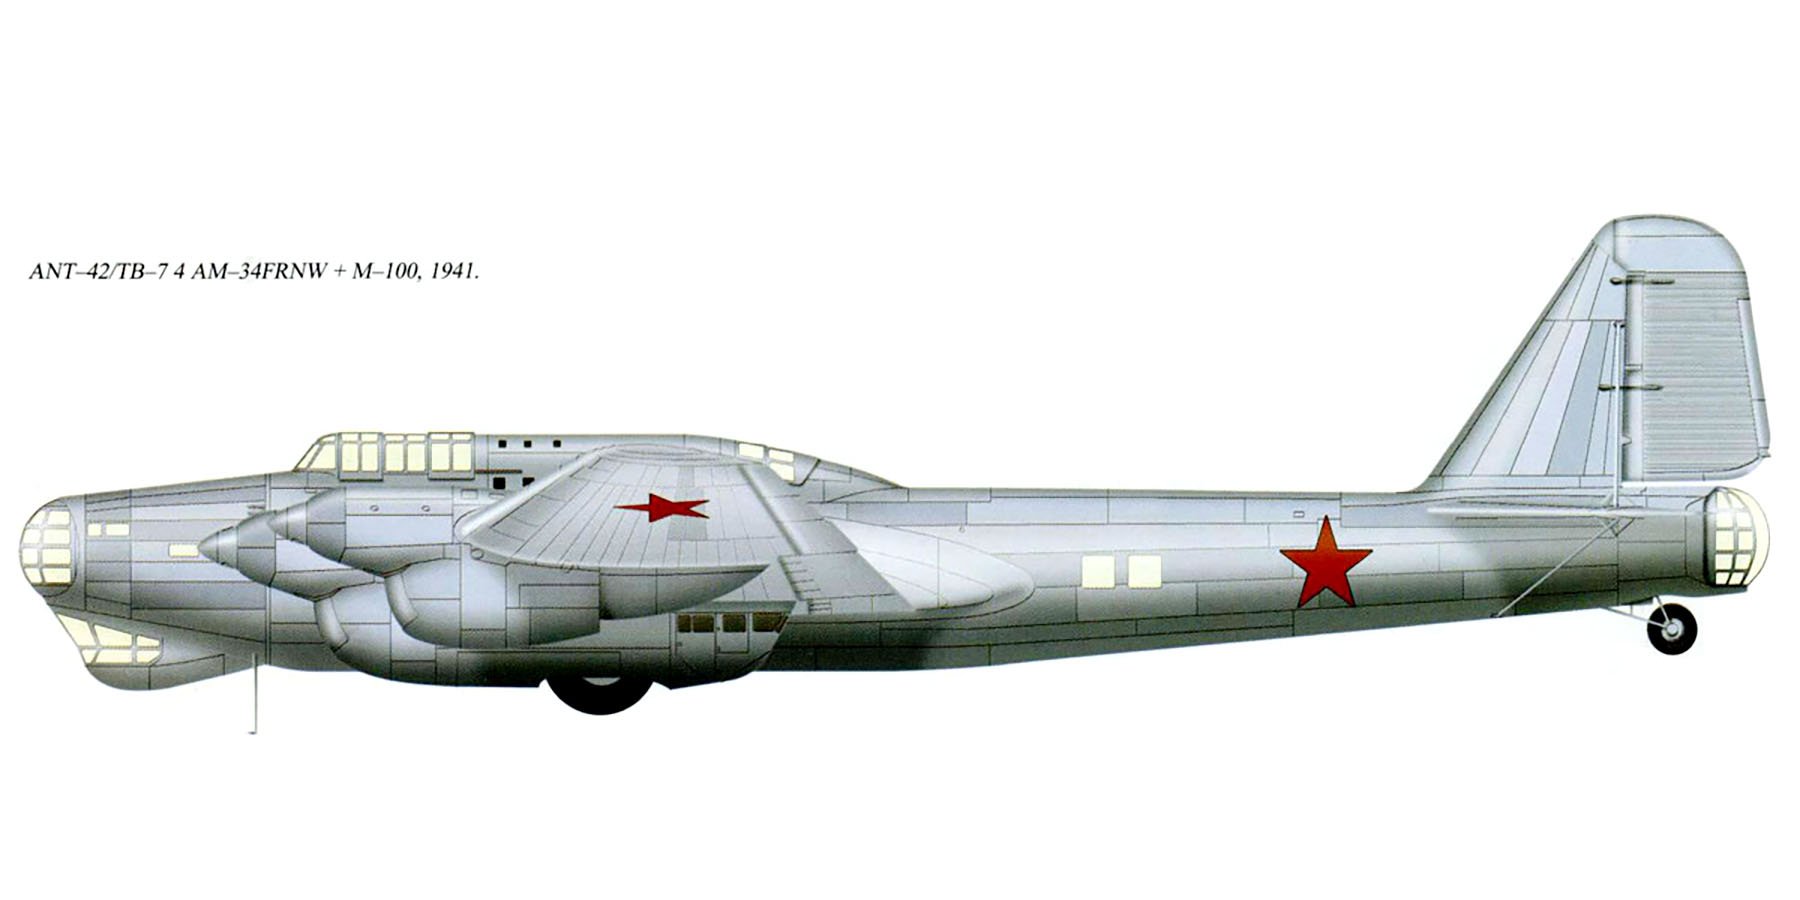 Самолет б 8. Самолет Петляков пе-8. Ант-42 (ТБ-7). ТБ-7 бомбардировщик. Тяжёлый бомбардировщики ТБ-7, пе-8 (ант-42).